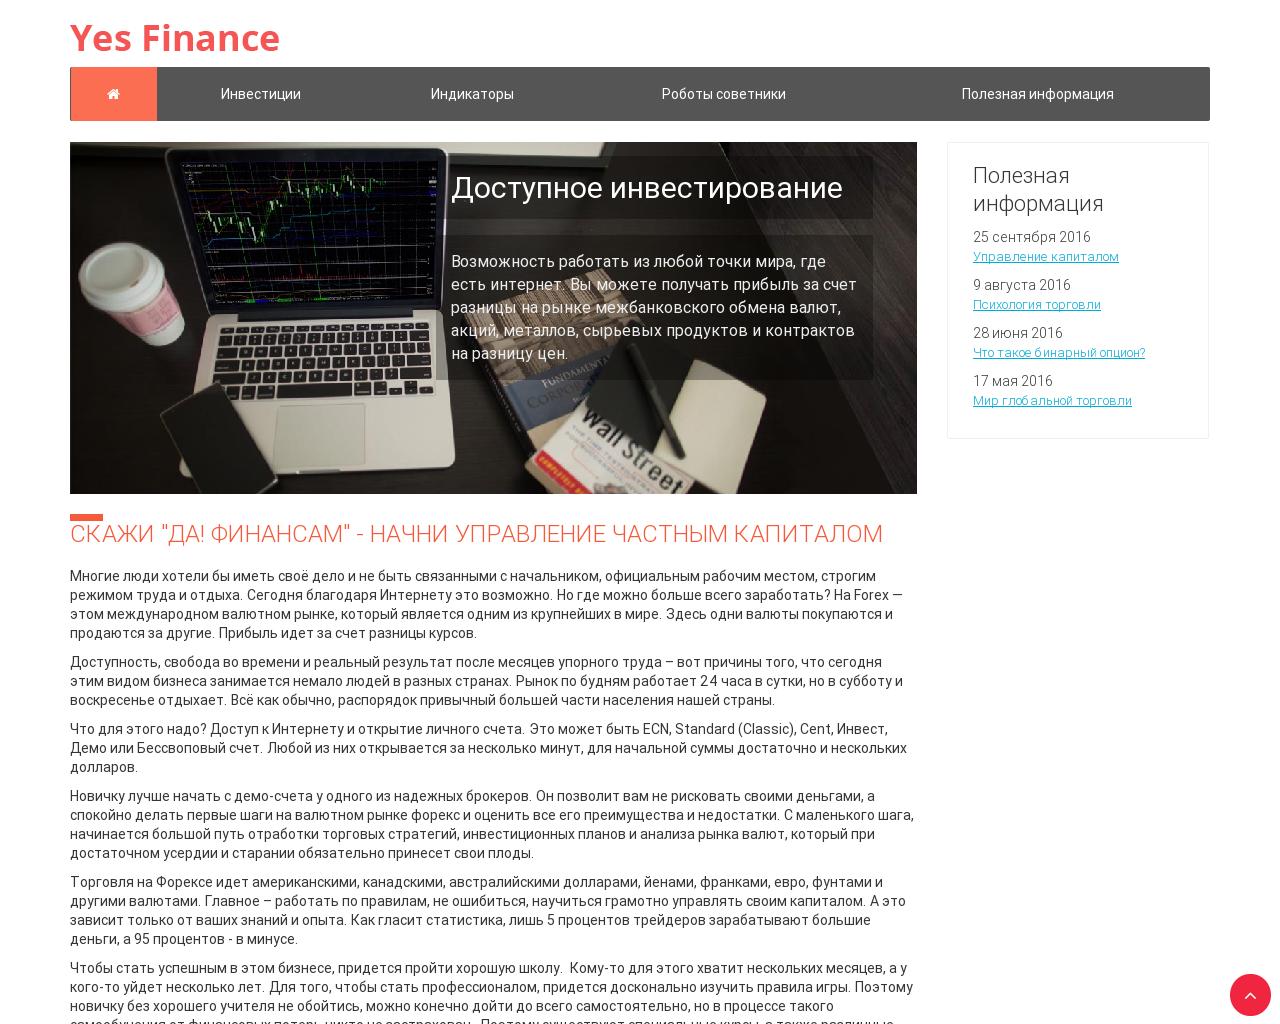 Изображение сайта yesfinance.ru в разрешении 1280x1024